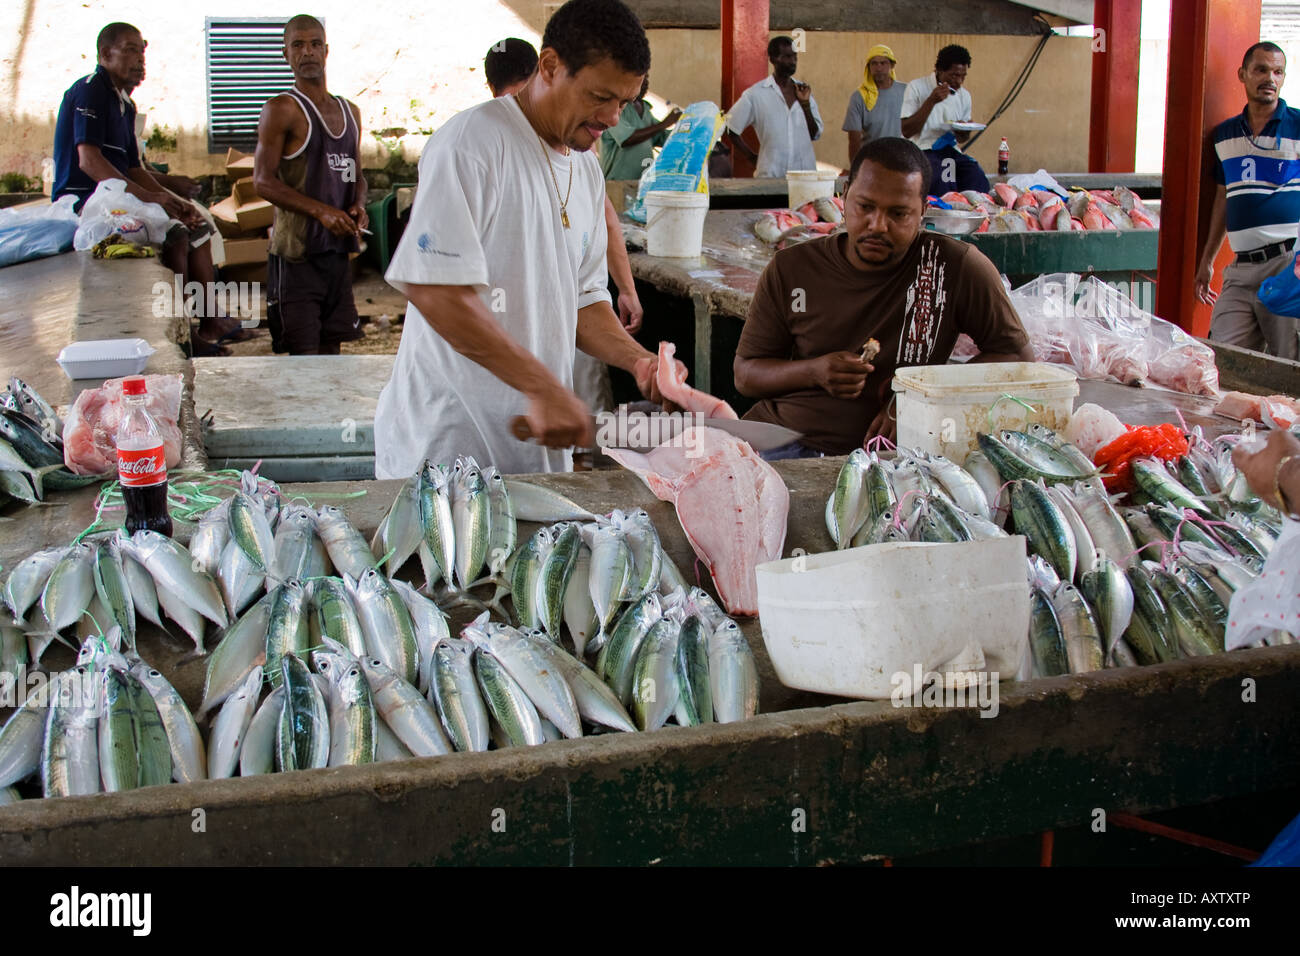 Fishmonger cutting fish in Victoria market, Seychelles Stock Photo - Alamy